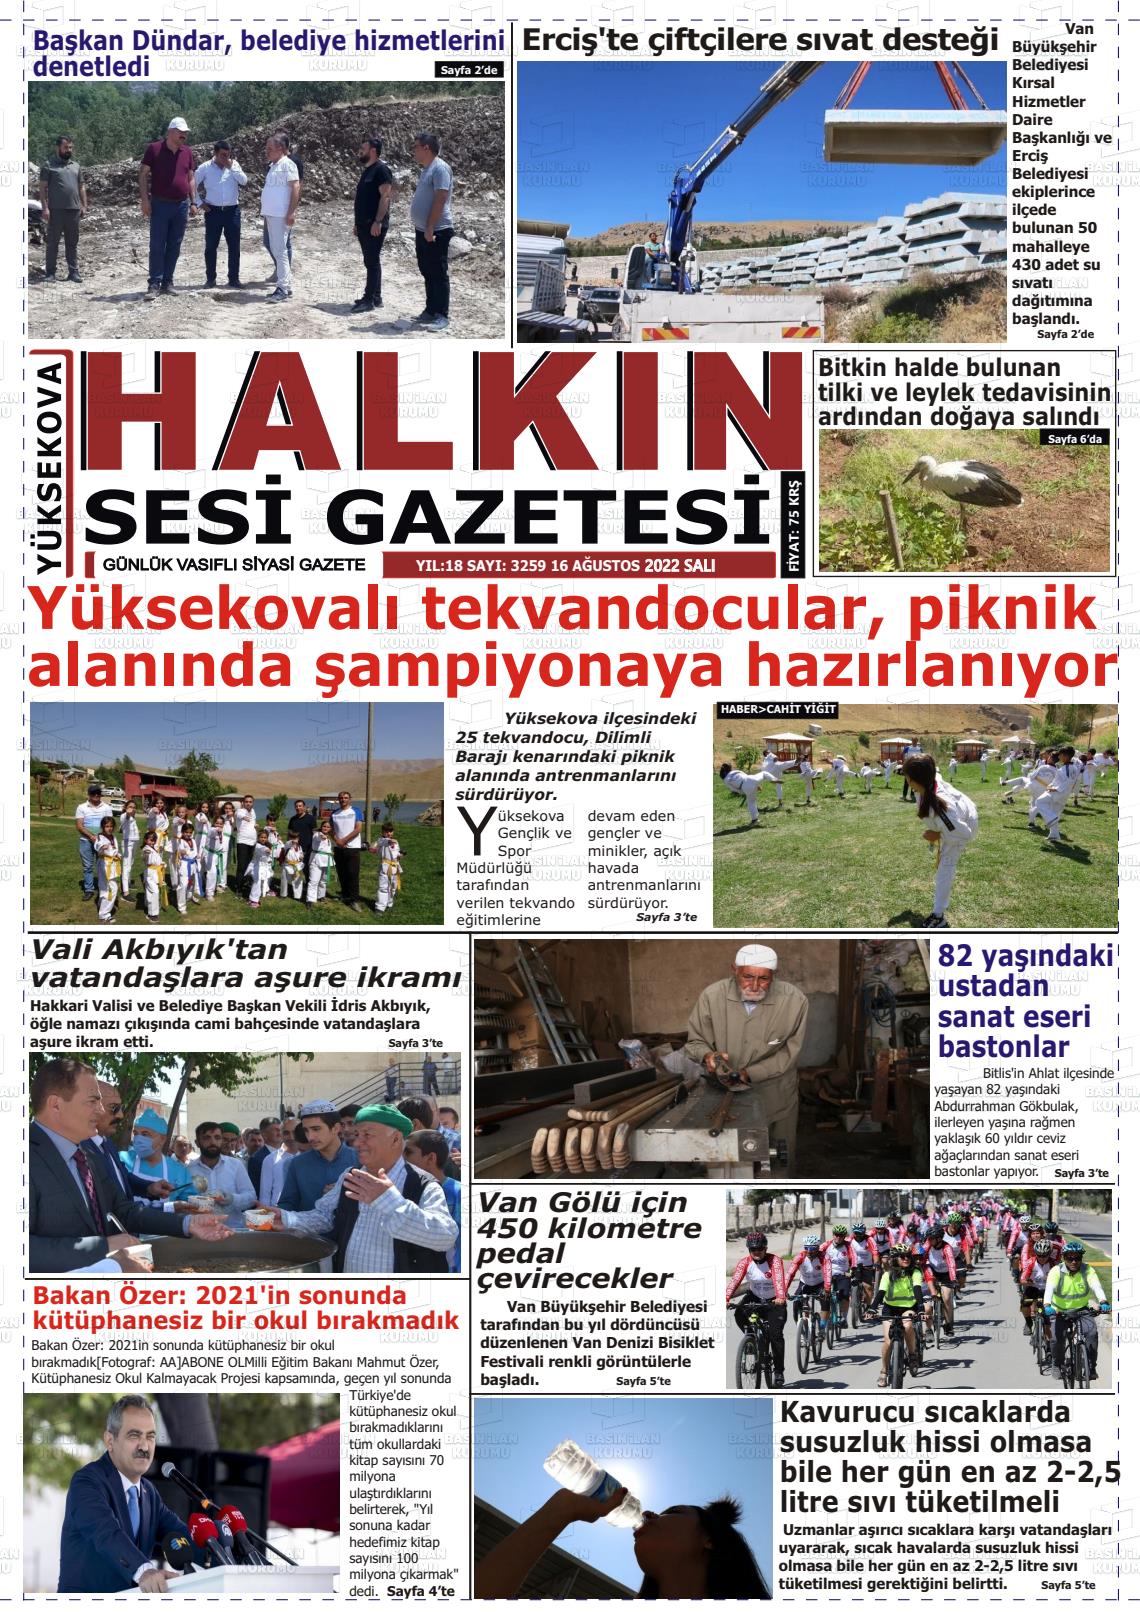 16 Ağustos 2022 Yüksekova Halkın Sesi Gazete Manşeti